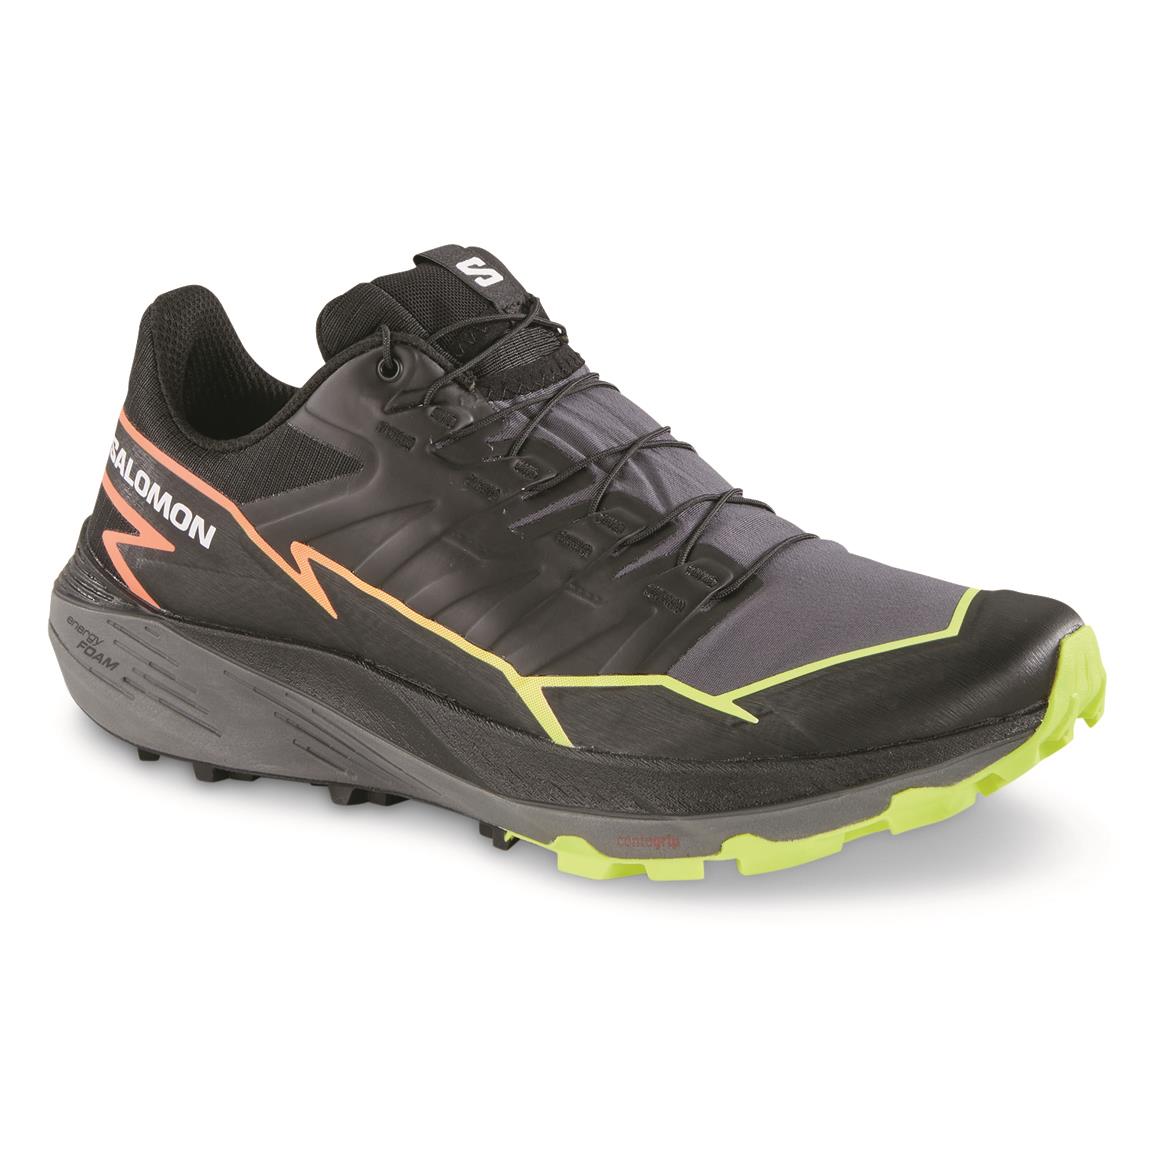 Salomon Men's Thundercross Trail Running Shoes - 736682, Casual Shoes ...